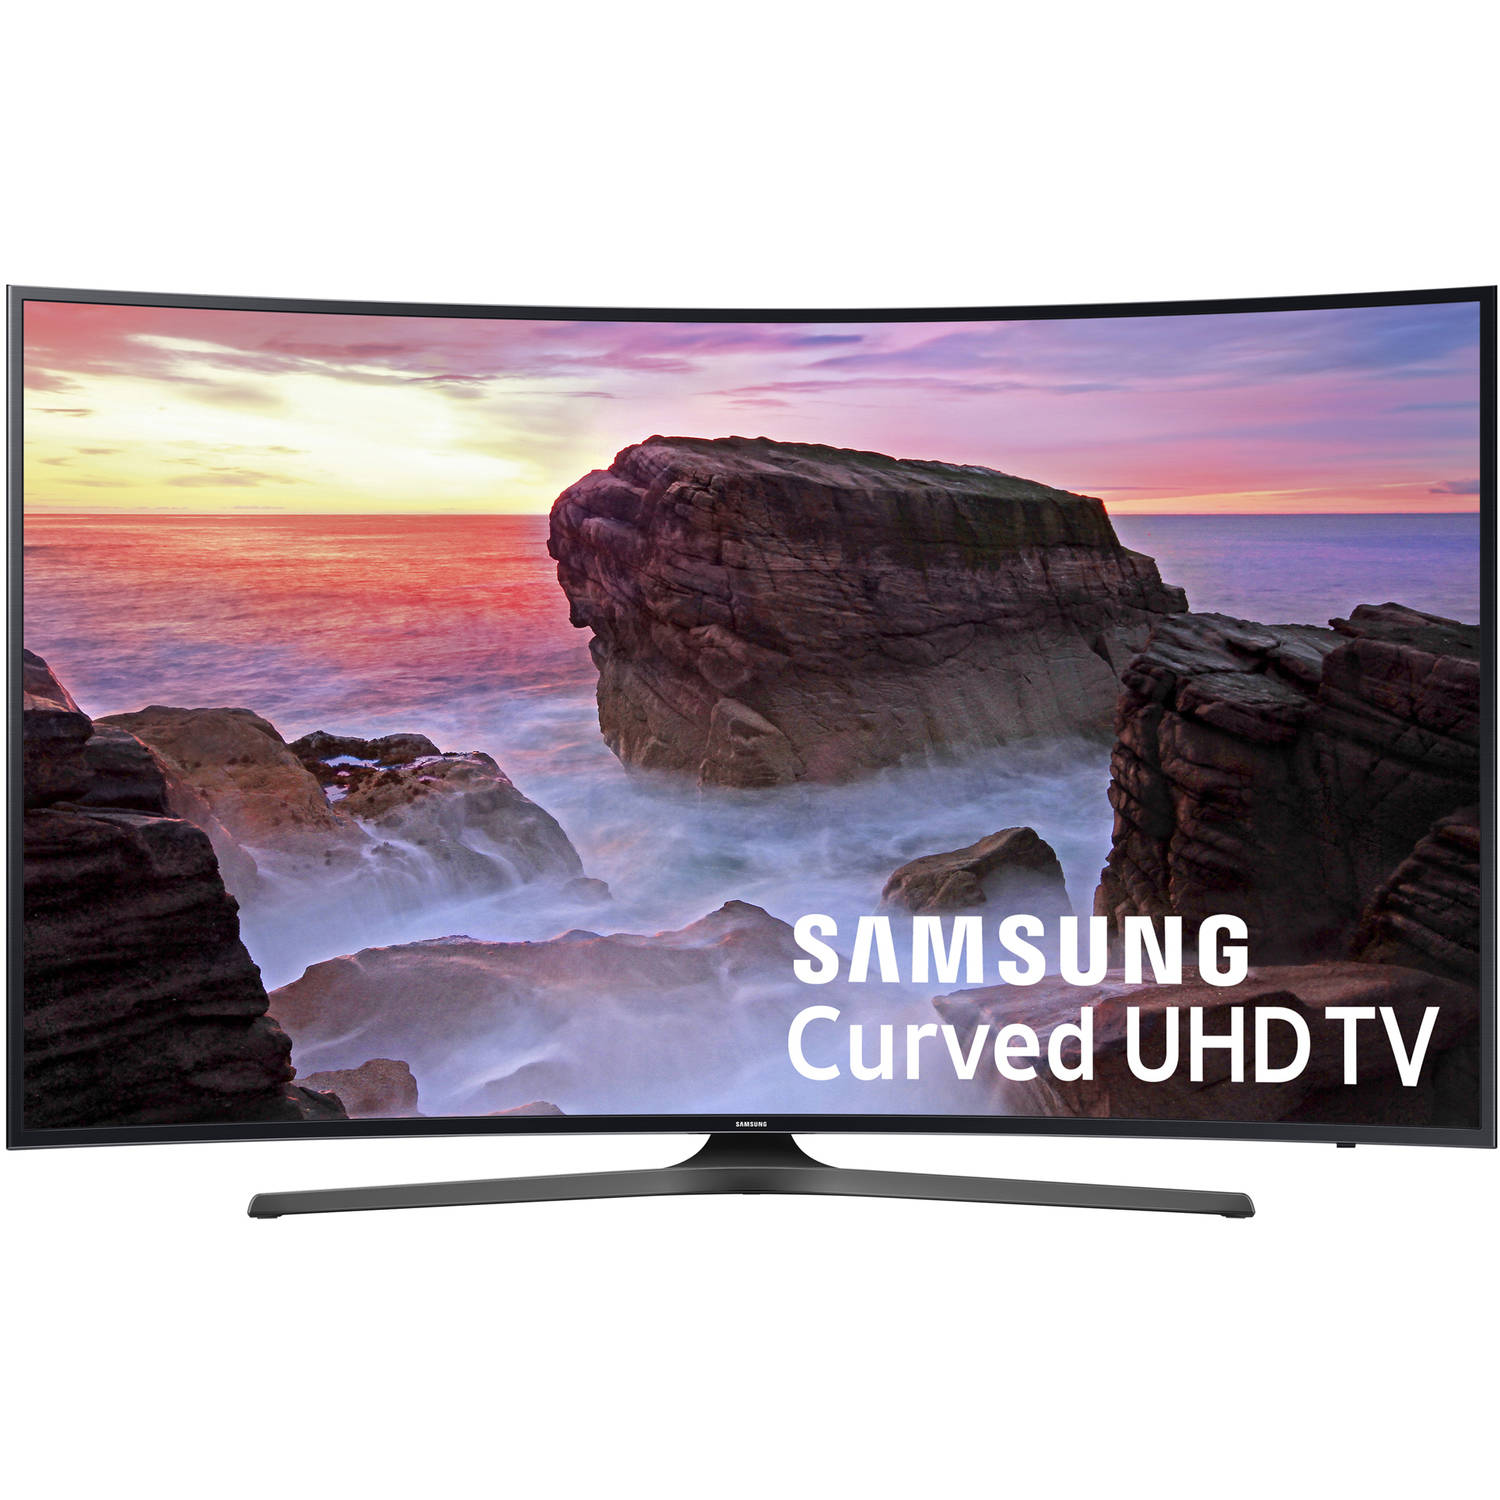 SAMSUNG 49" Class Curved 4K (2160P) Ultra HD Smart LED TV (UN49MU6500FXZA) - image 1 of 7